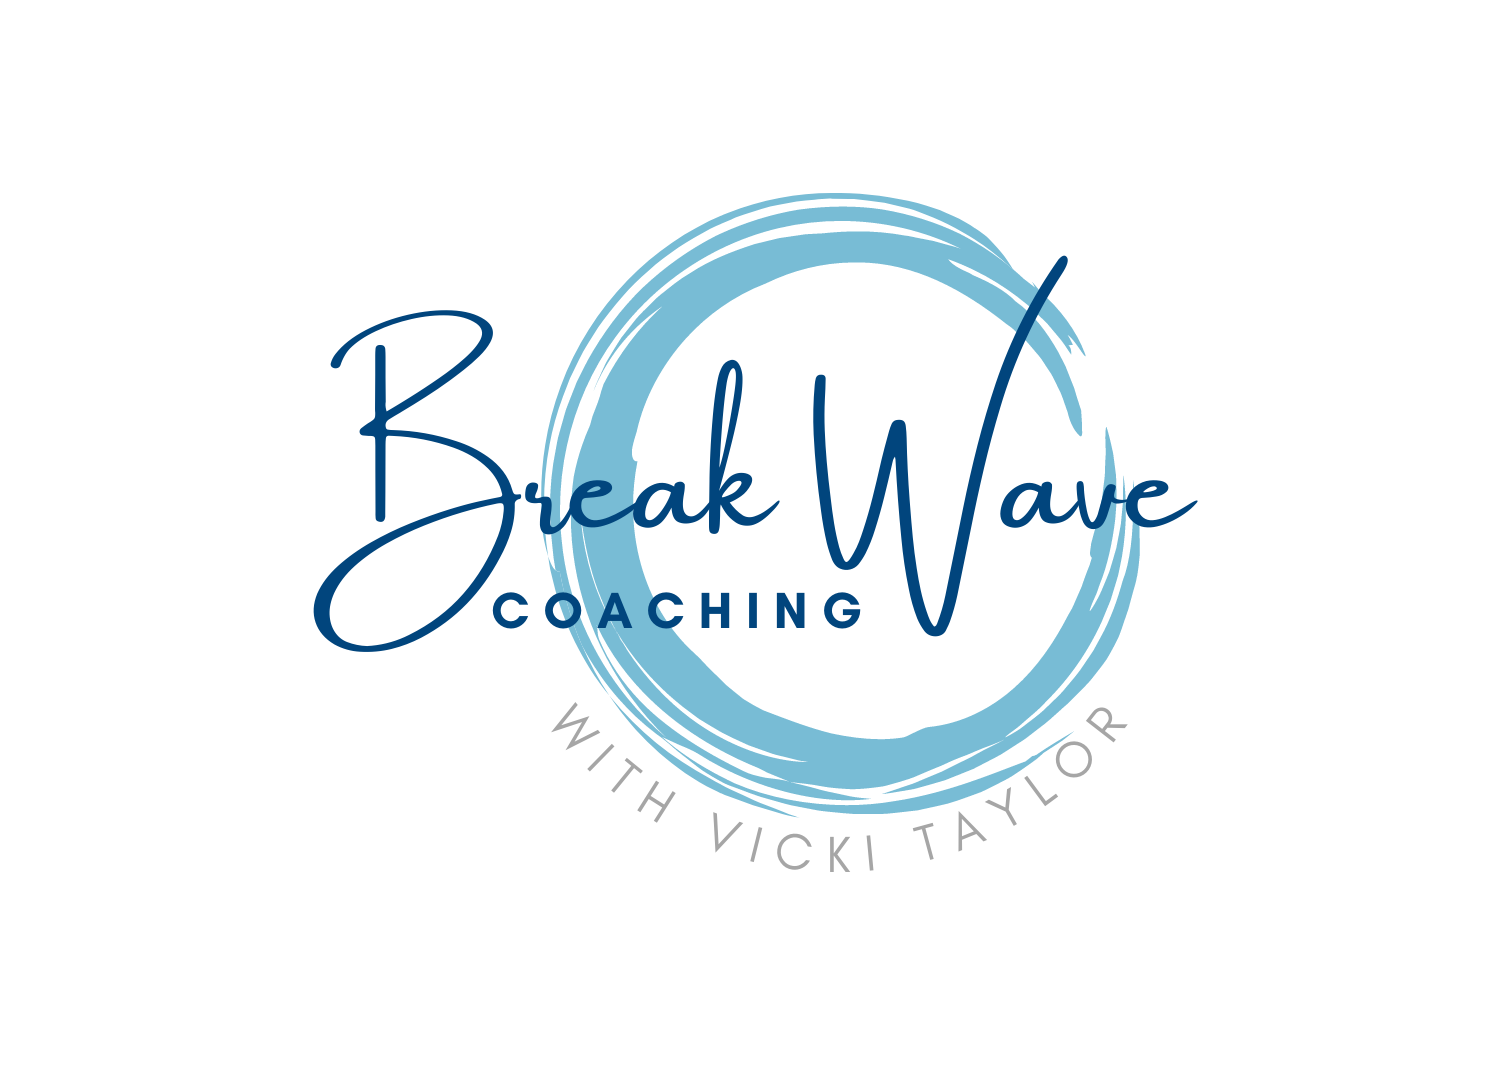 Break Wave Coaching - Vicki Taylor